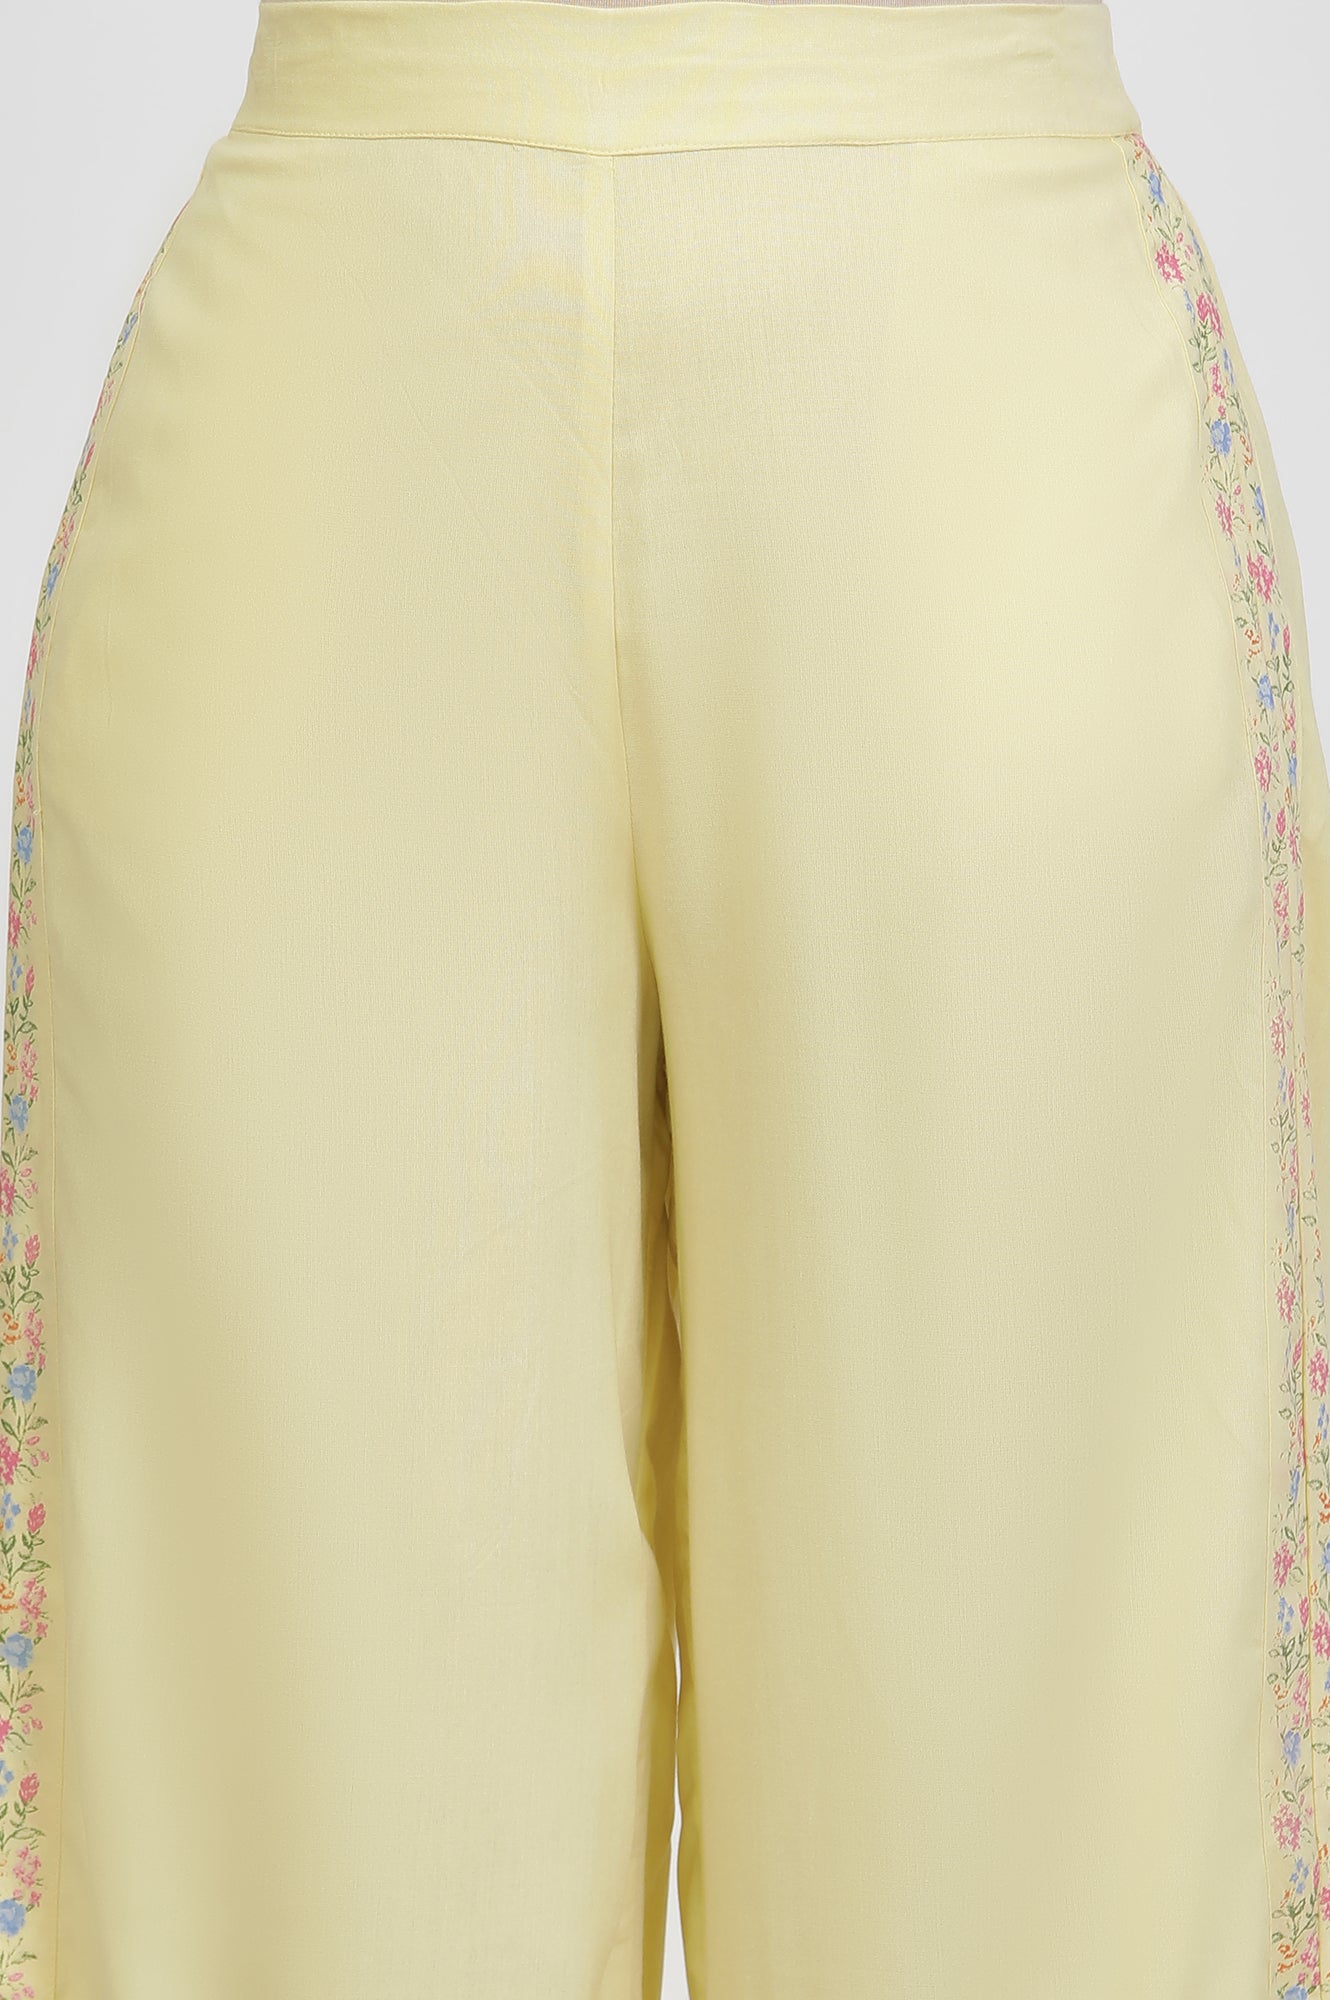 Yellow Embroidered Kurta And Pants Set